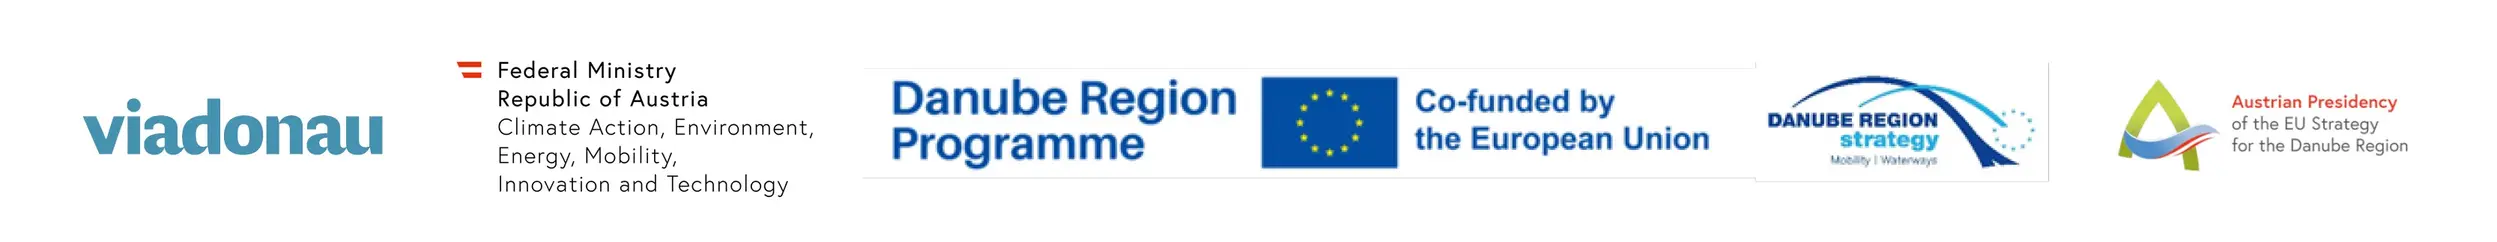 Logos viadonau, BMK, Danube Region Programme EU, Danube Region Strategy, Austrian Presidency of the EU Strategy for the Danube Region